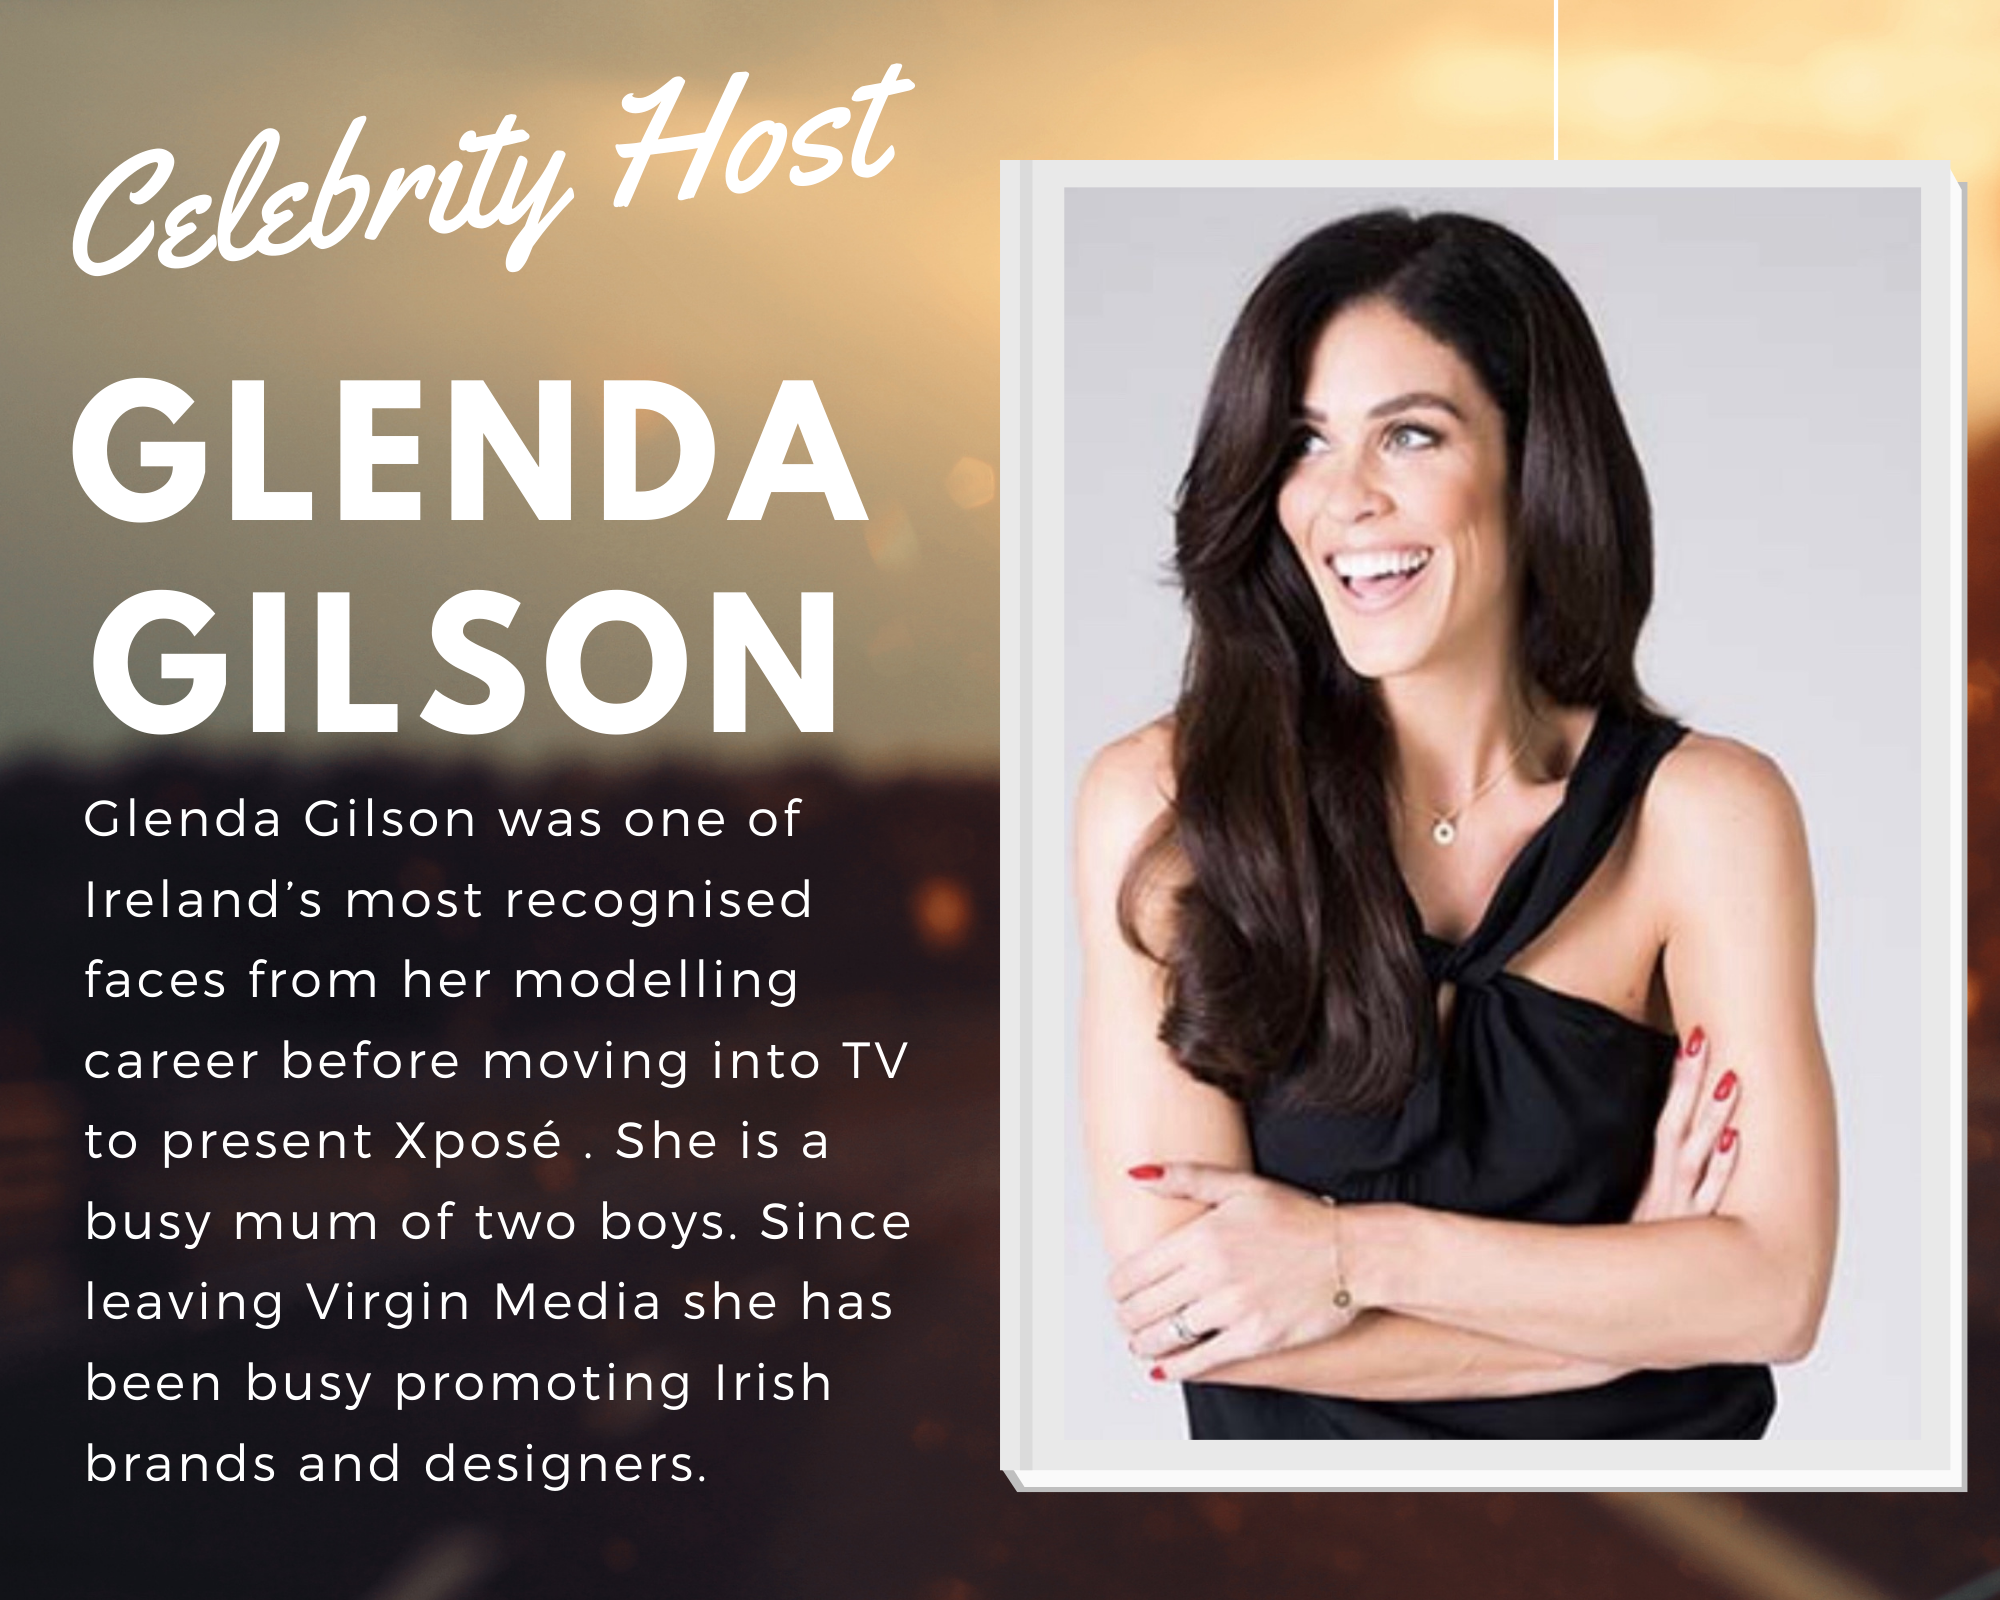 Hosted by Glenda Gilson